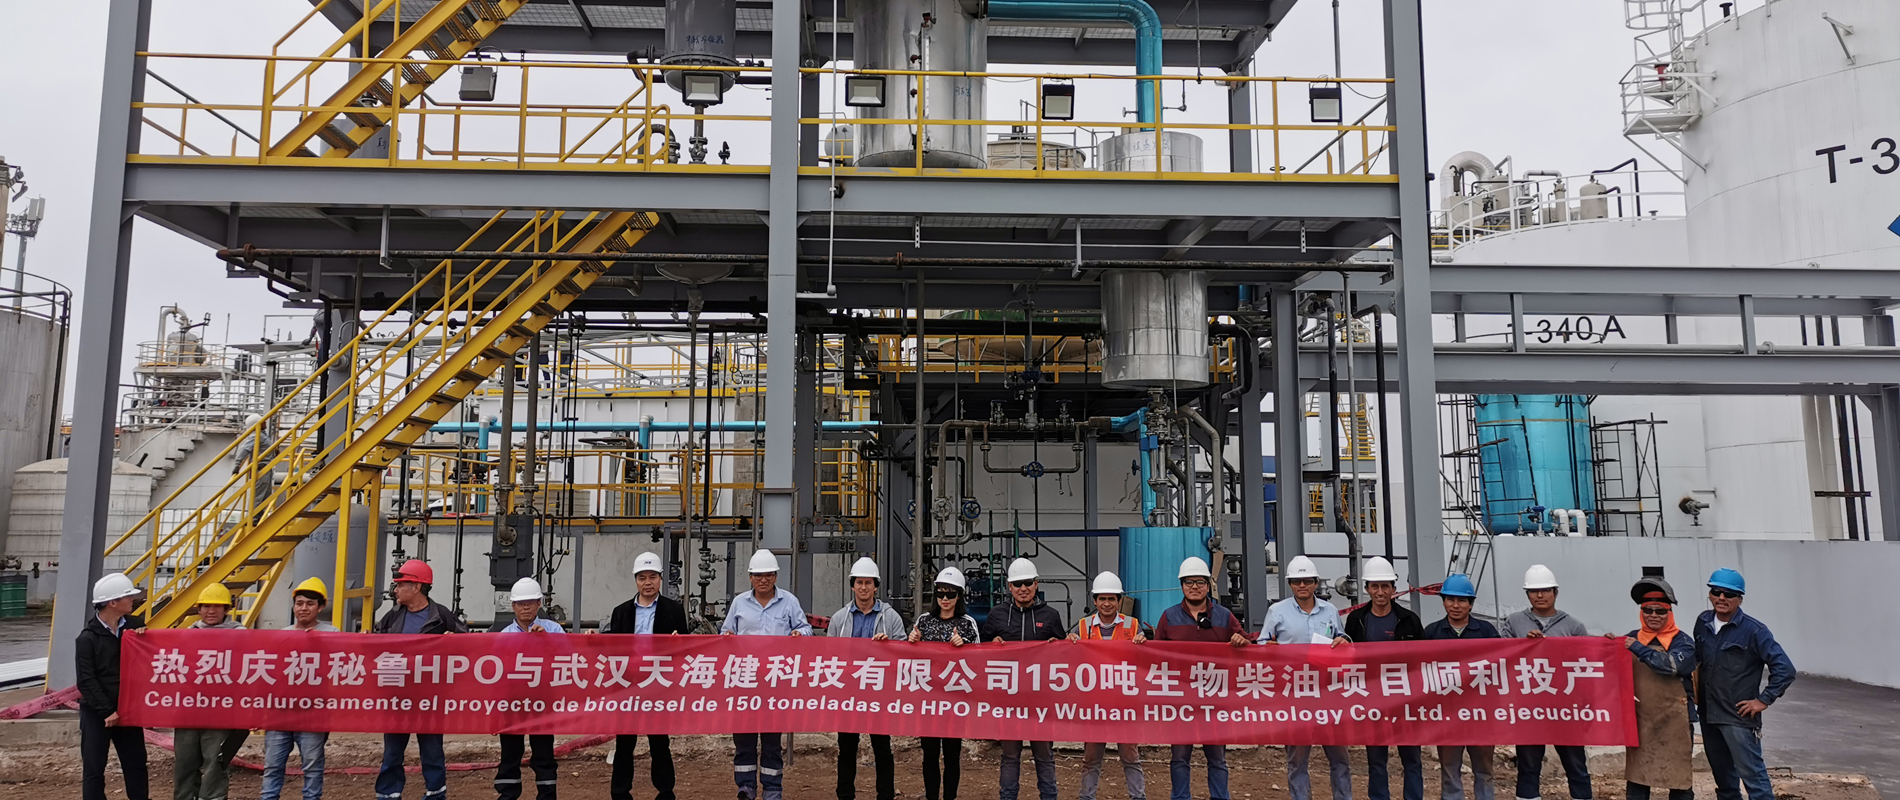 HDC’s 150-ton biodiesel project at HPO in Peru